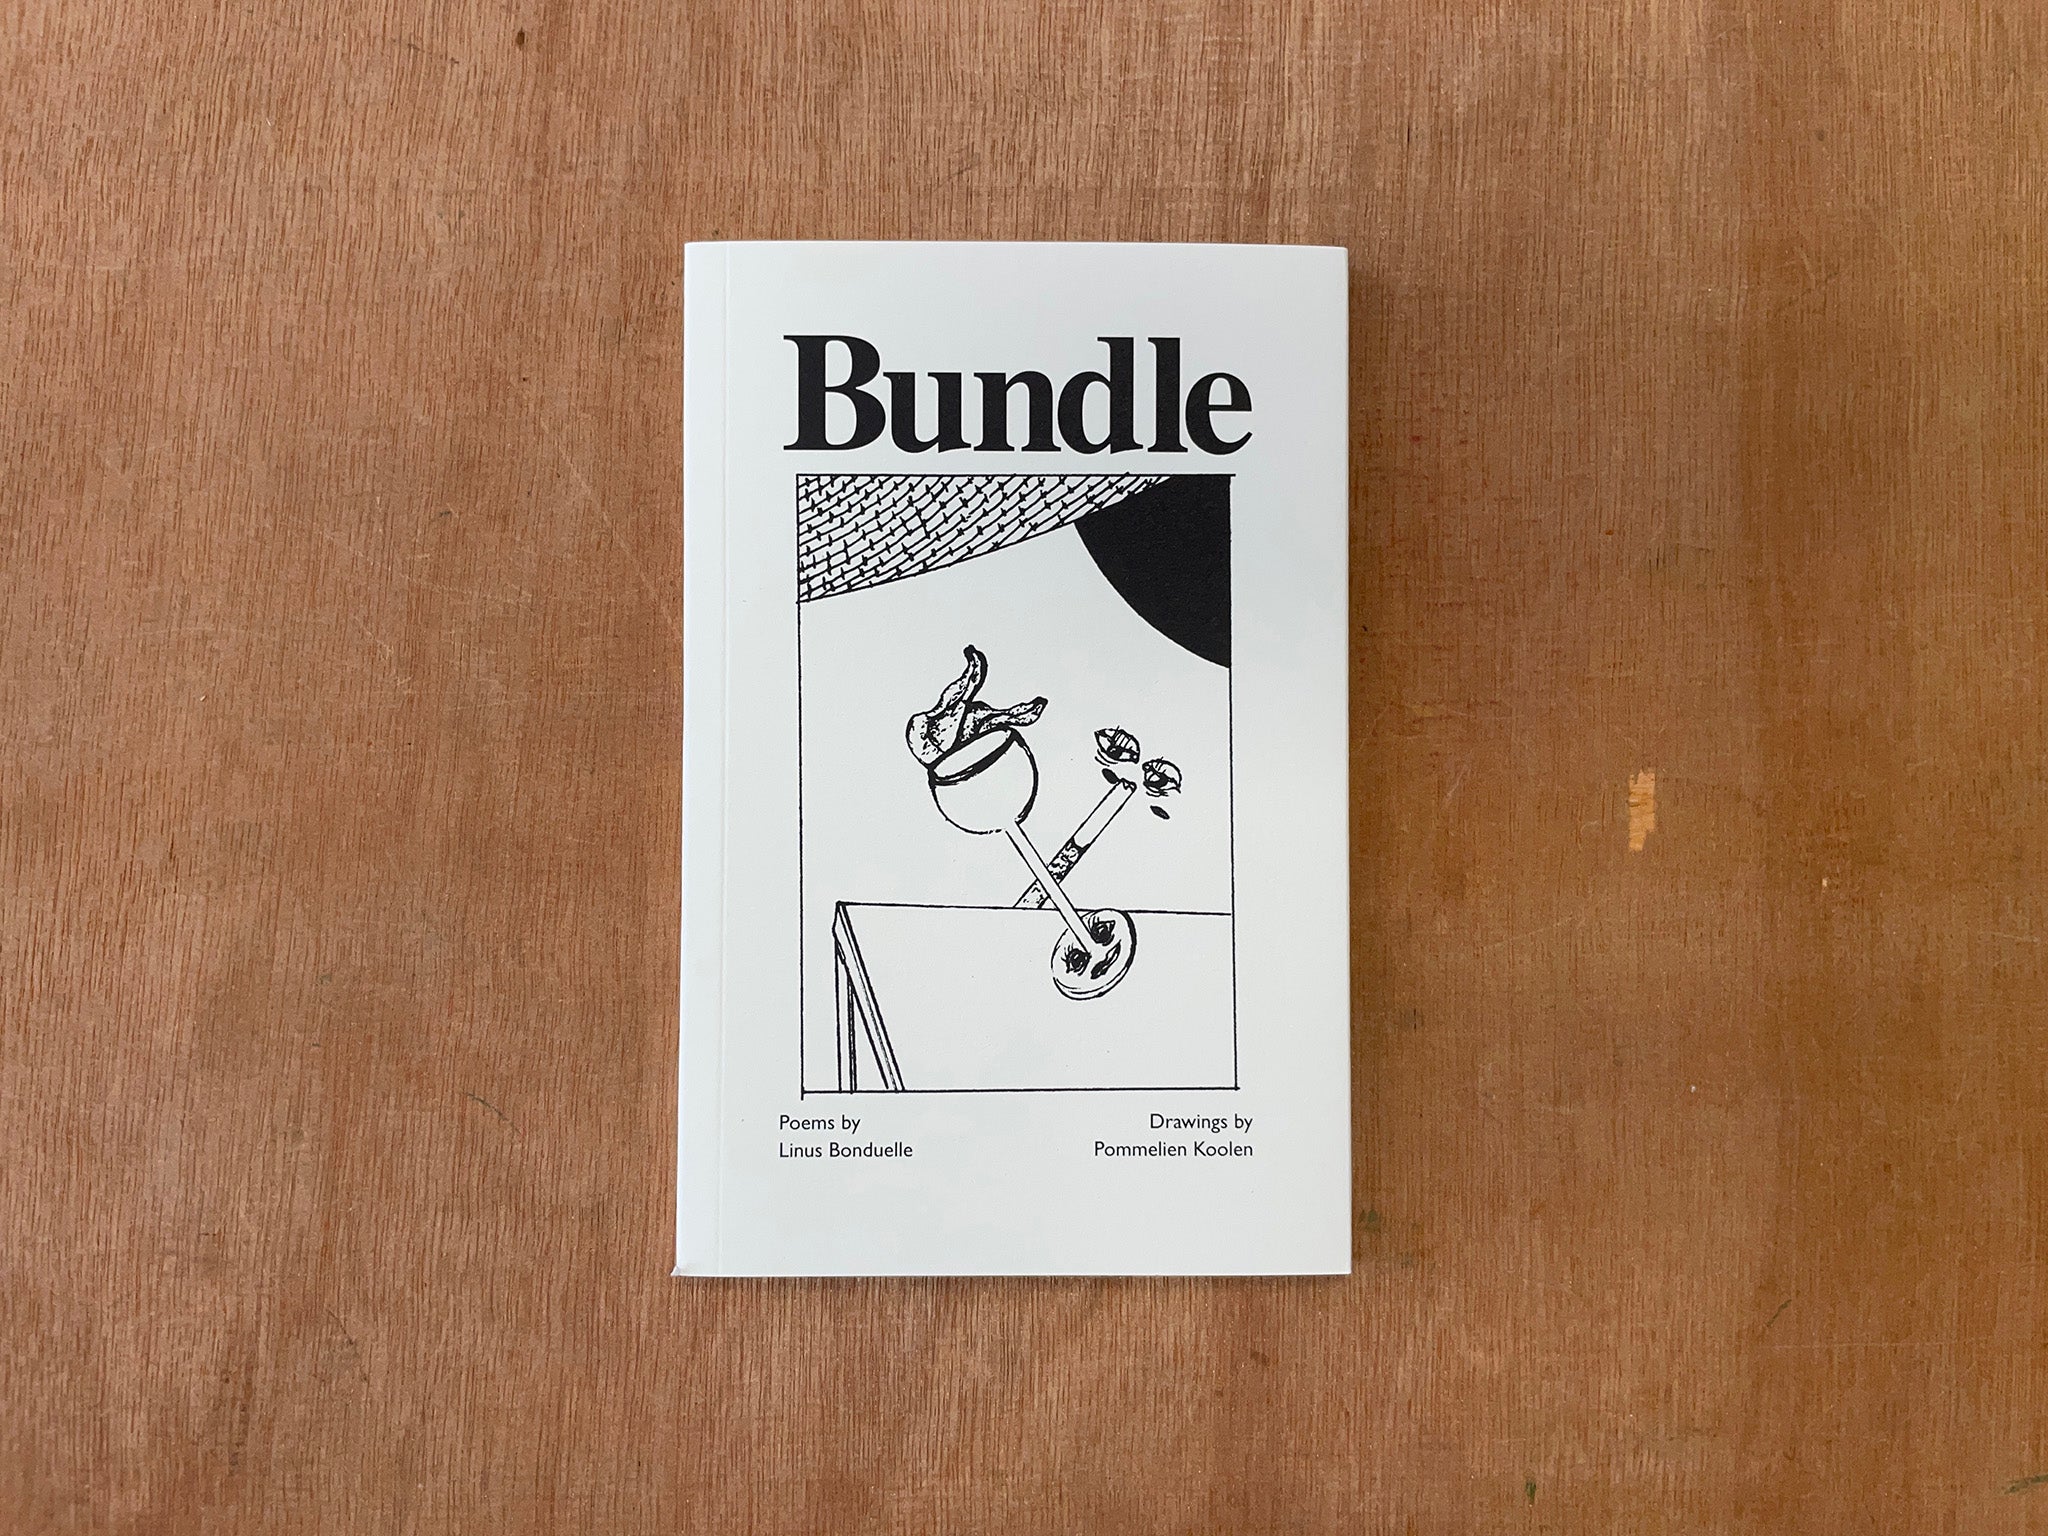 BUNDLE by Linus Bonduelle and Pommelien Koolen